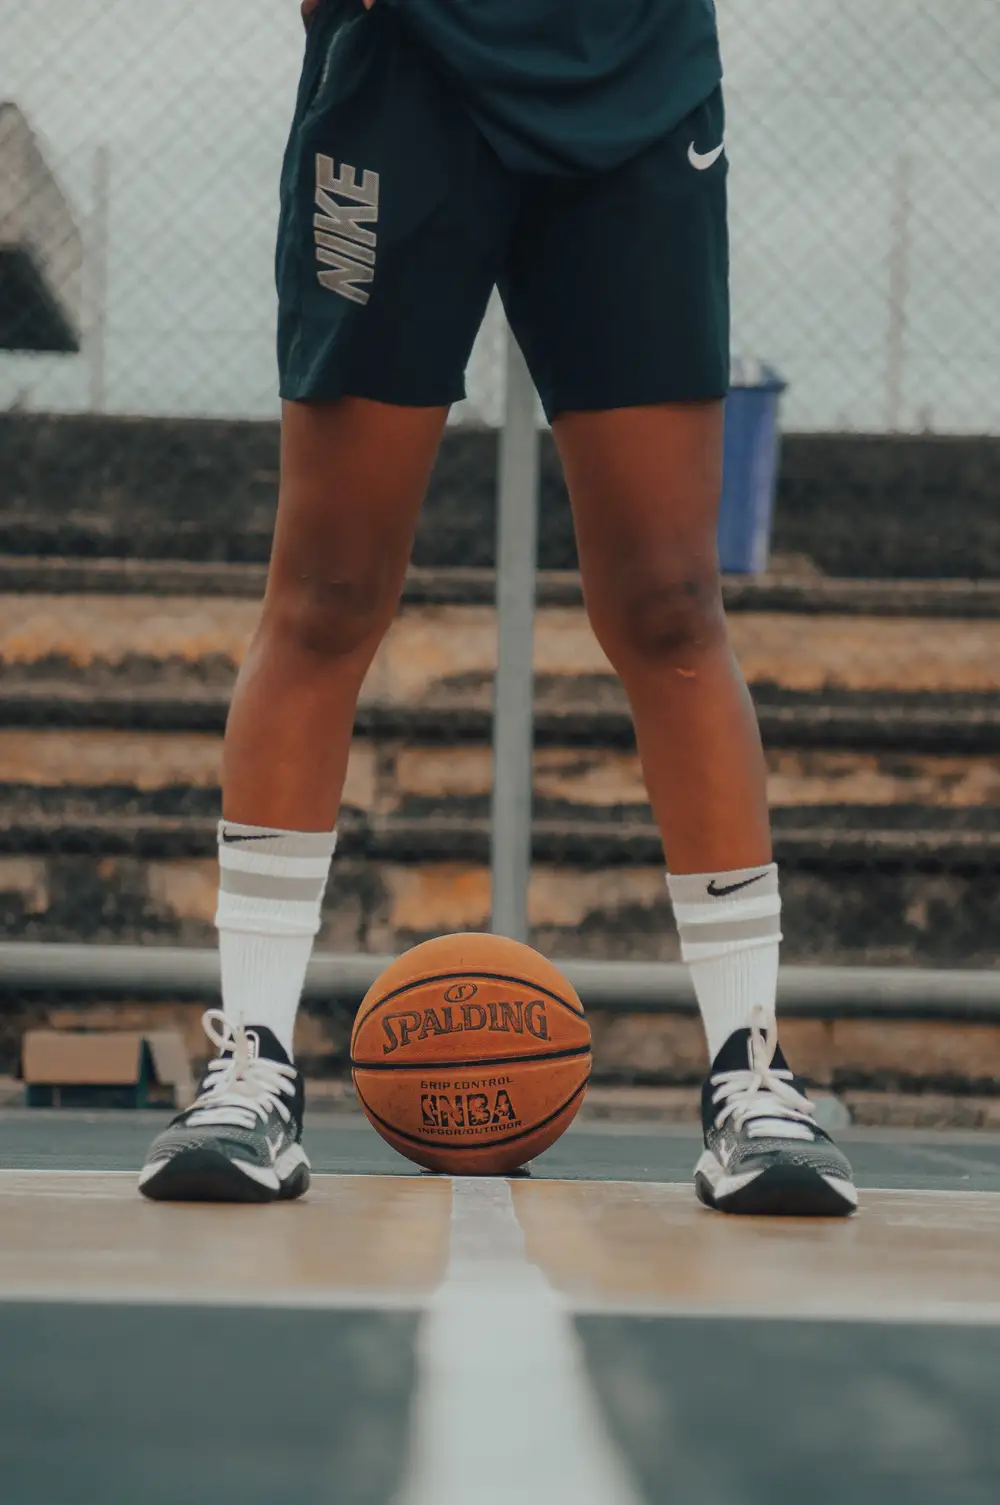 man standing behind a basketball on a court